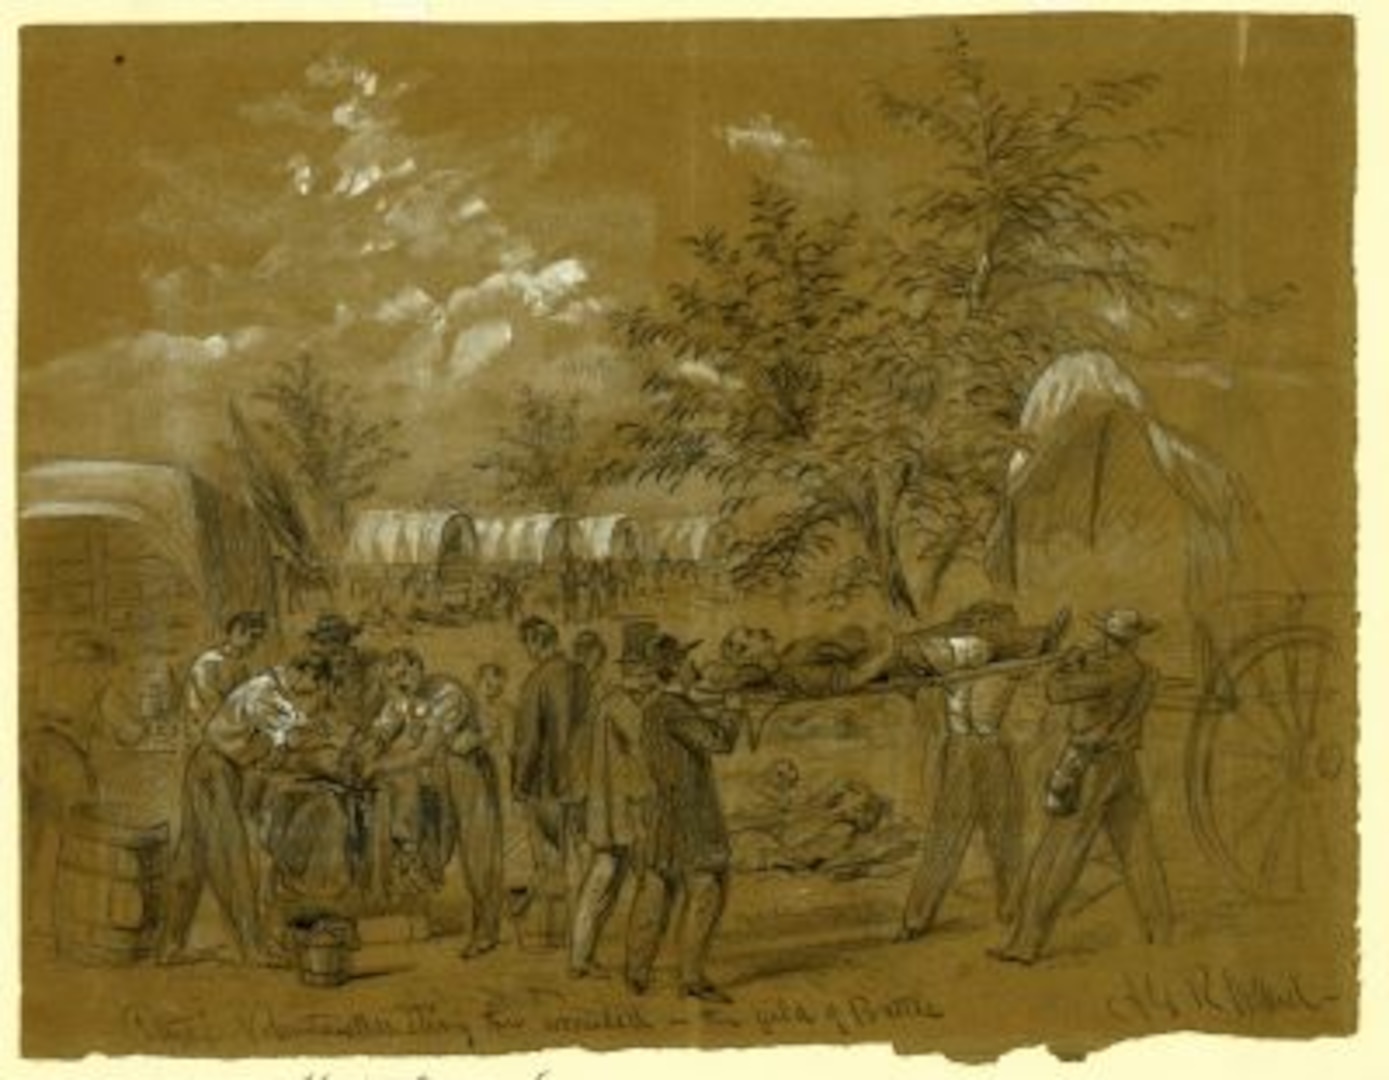 Borden Institute releases historical Battle of Antietam publication